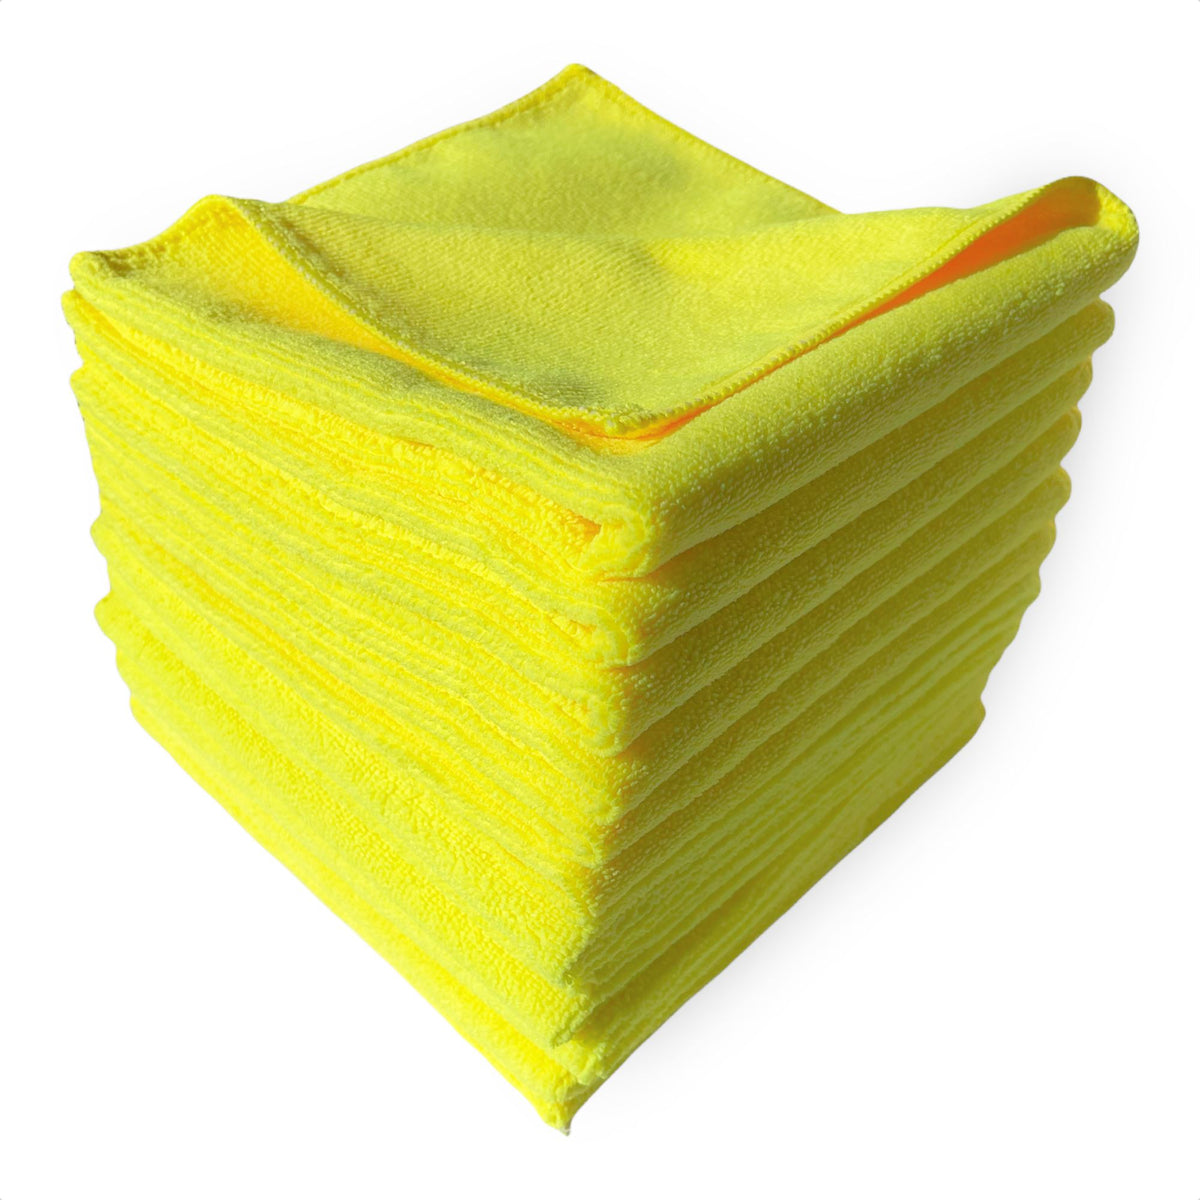 12 Pack Super Soft Microfiber Cleaning Cloths, Eco-Friendly Kitchen Towels  Wash Cloths - Car Cleaning Cloths Machine Washable, Super Absorbent,  Kitchen Lint-free Dishcloths (Random color) 